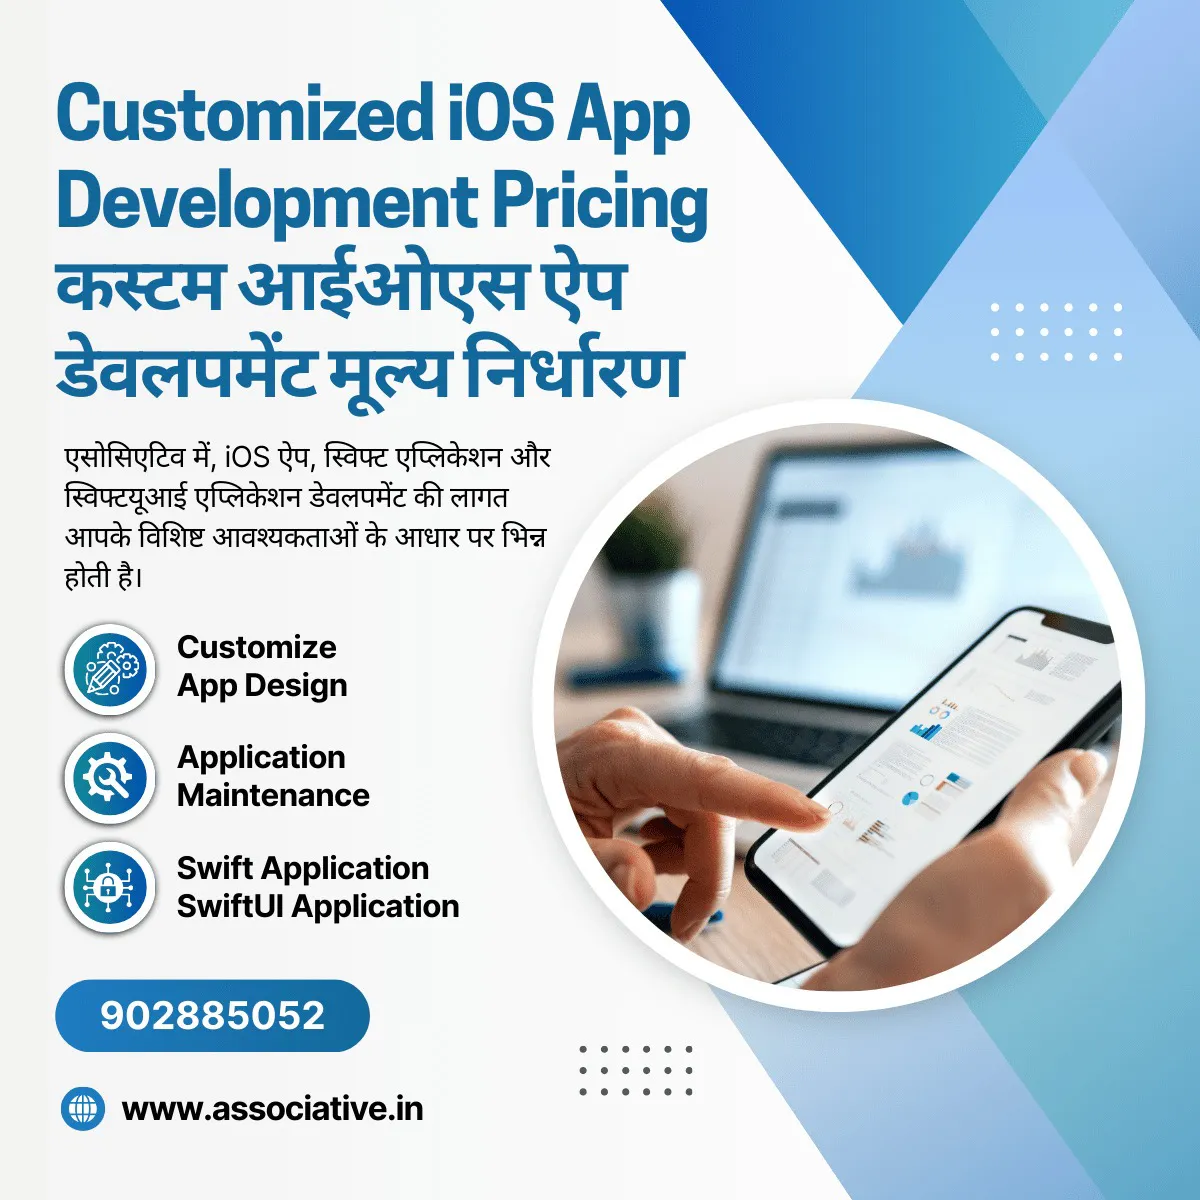 Customized iOS App Development